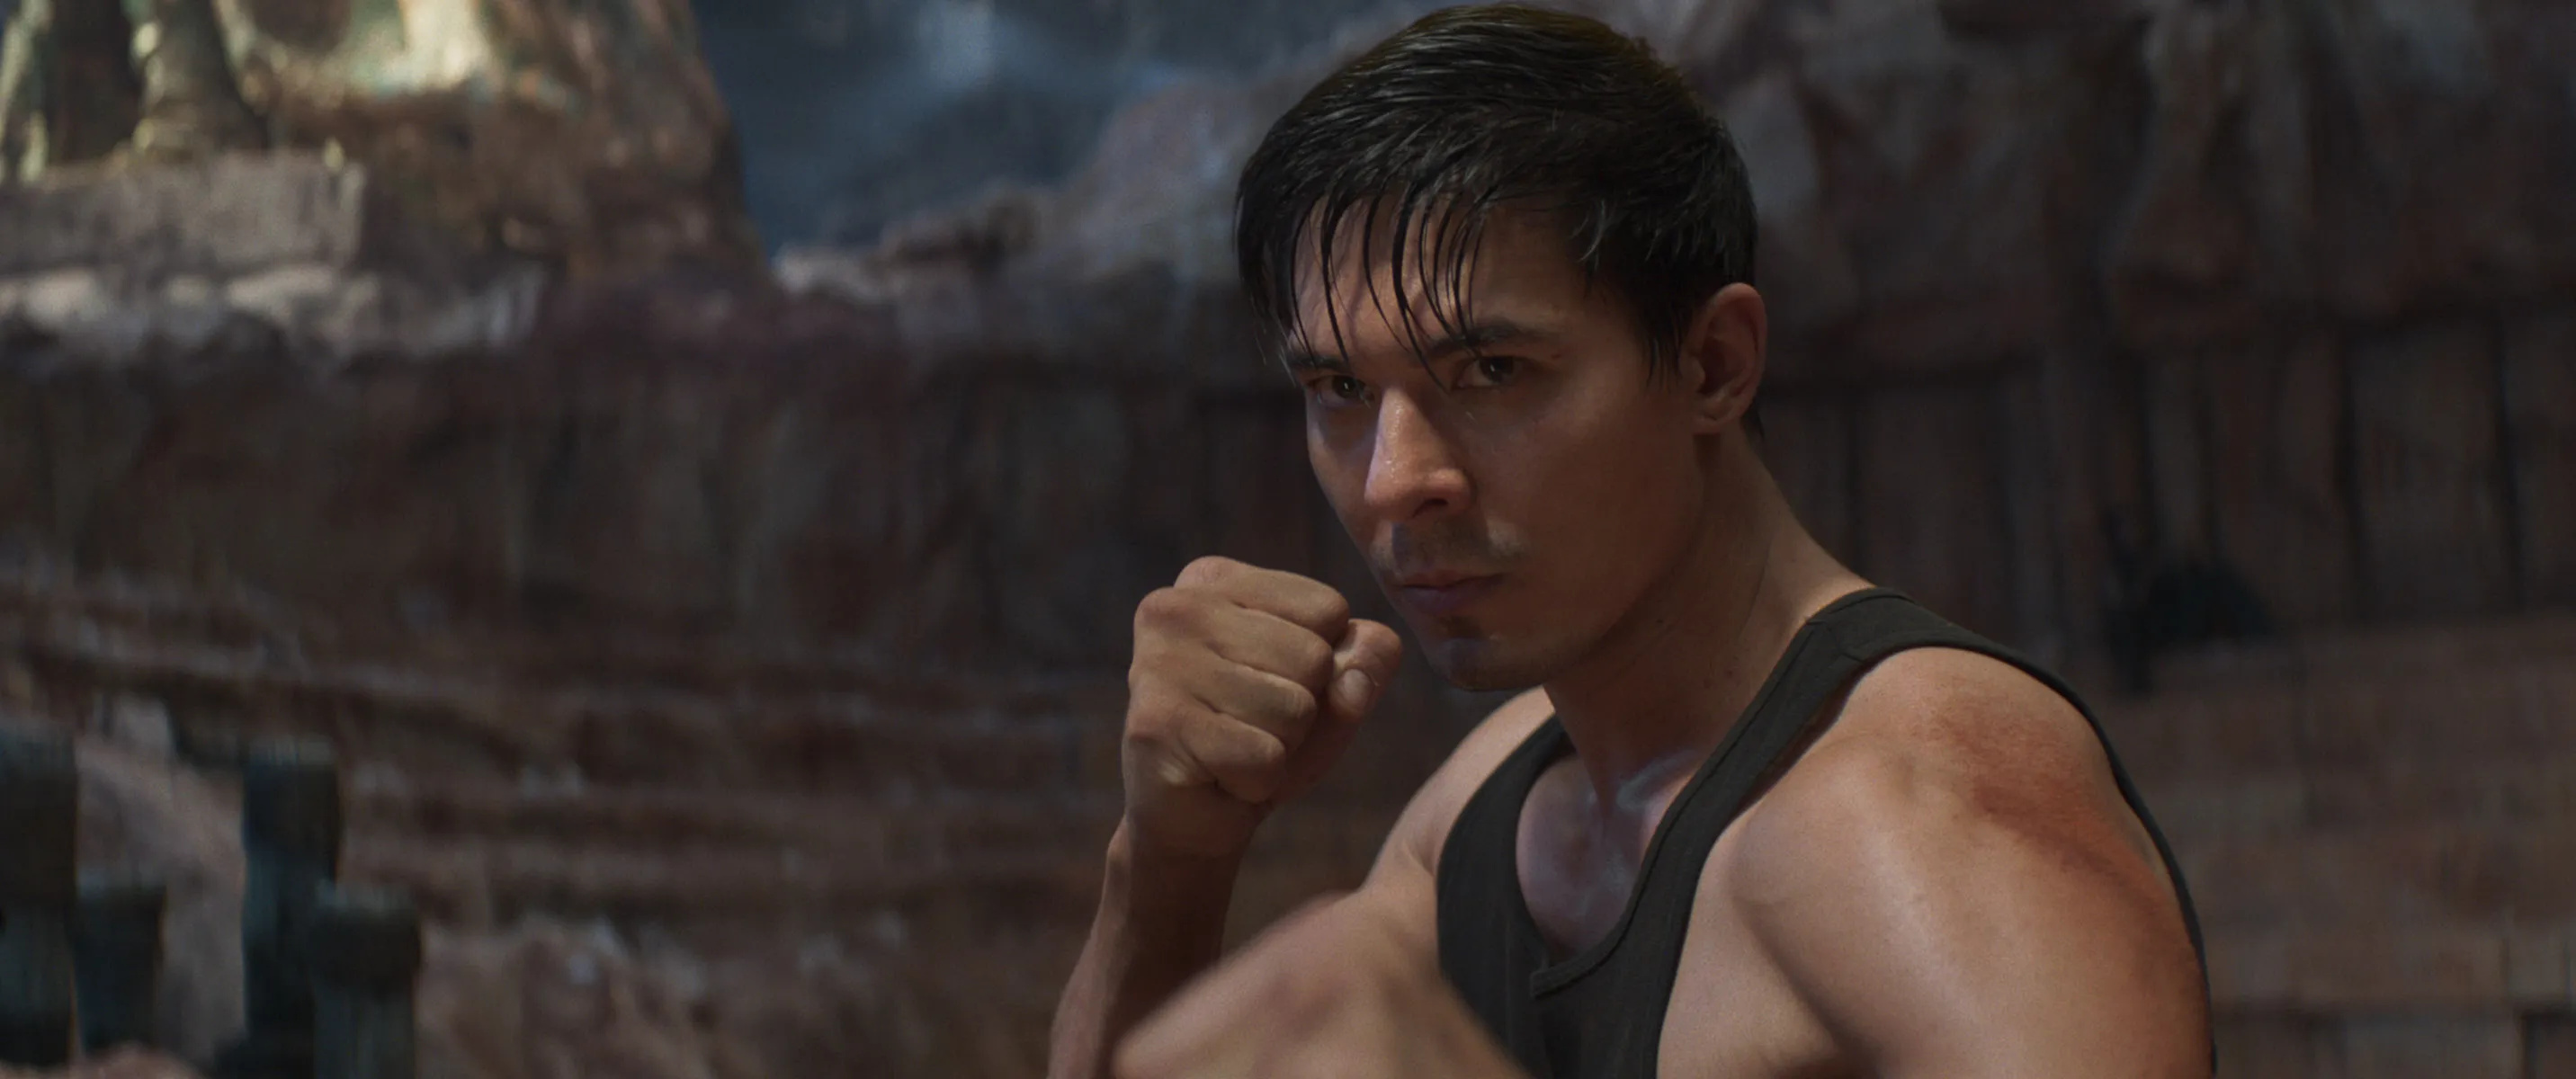 Cole Young movies, Mortal Kombat protagonist, Lewis Tan interview, Triumph over death, 2870x1200 Dual Screen Desktop